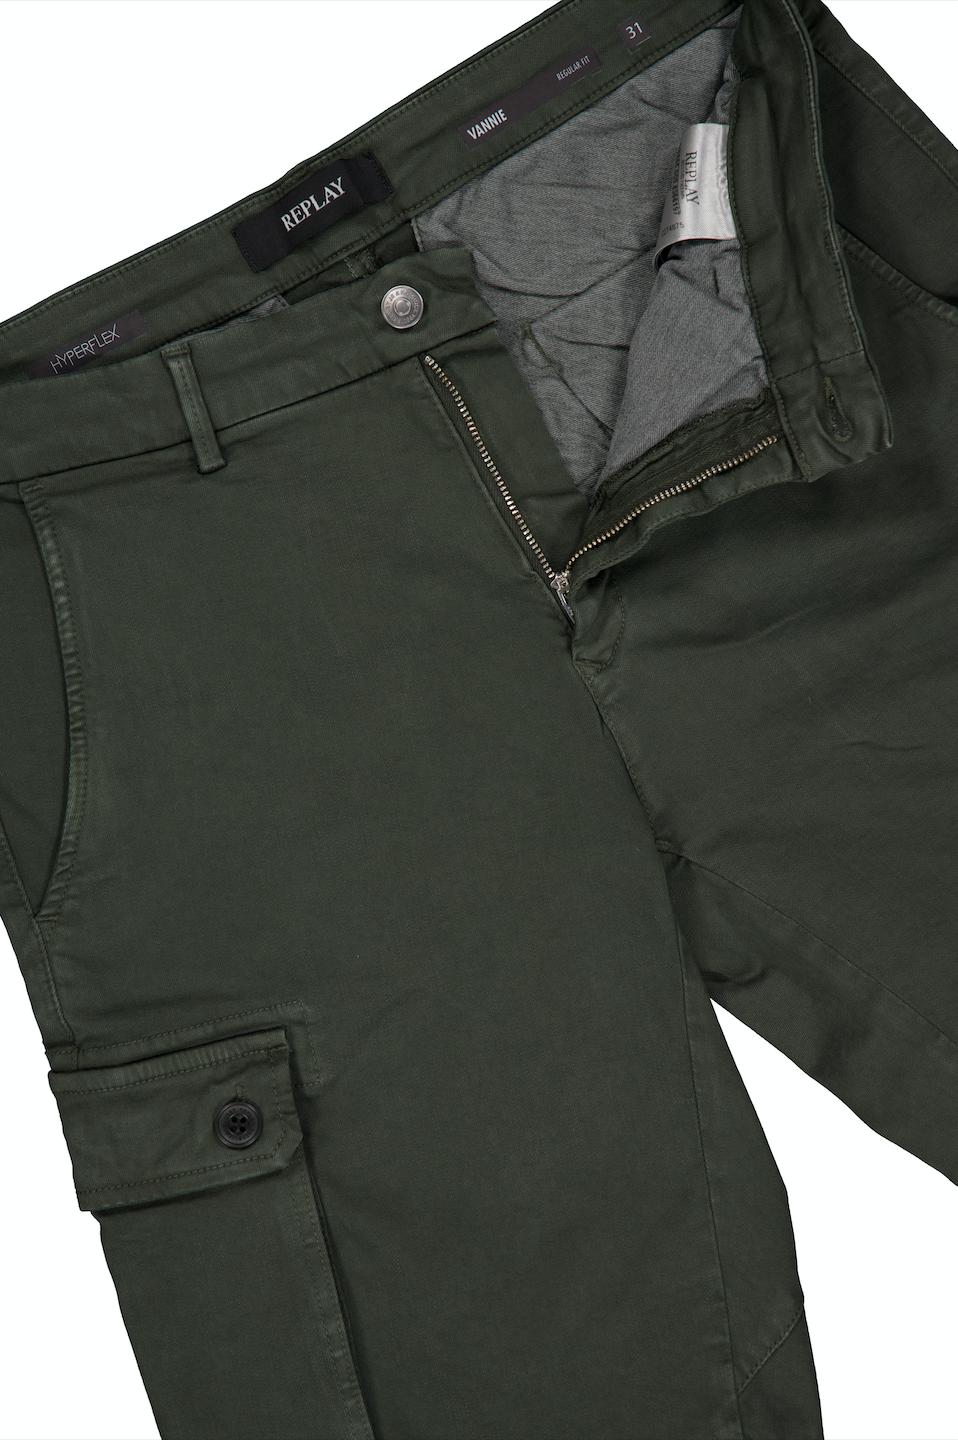 Vannie Cargo Shorts Olive-Shorts-Bogartstore